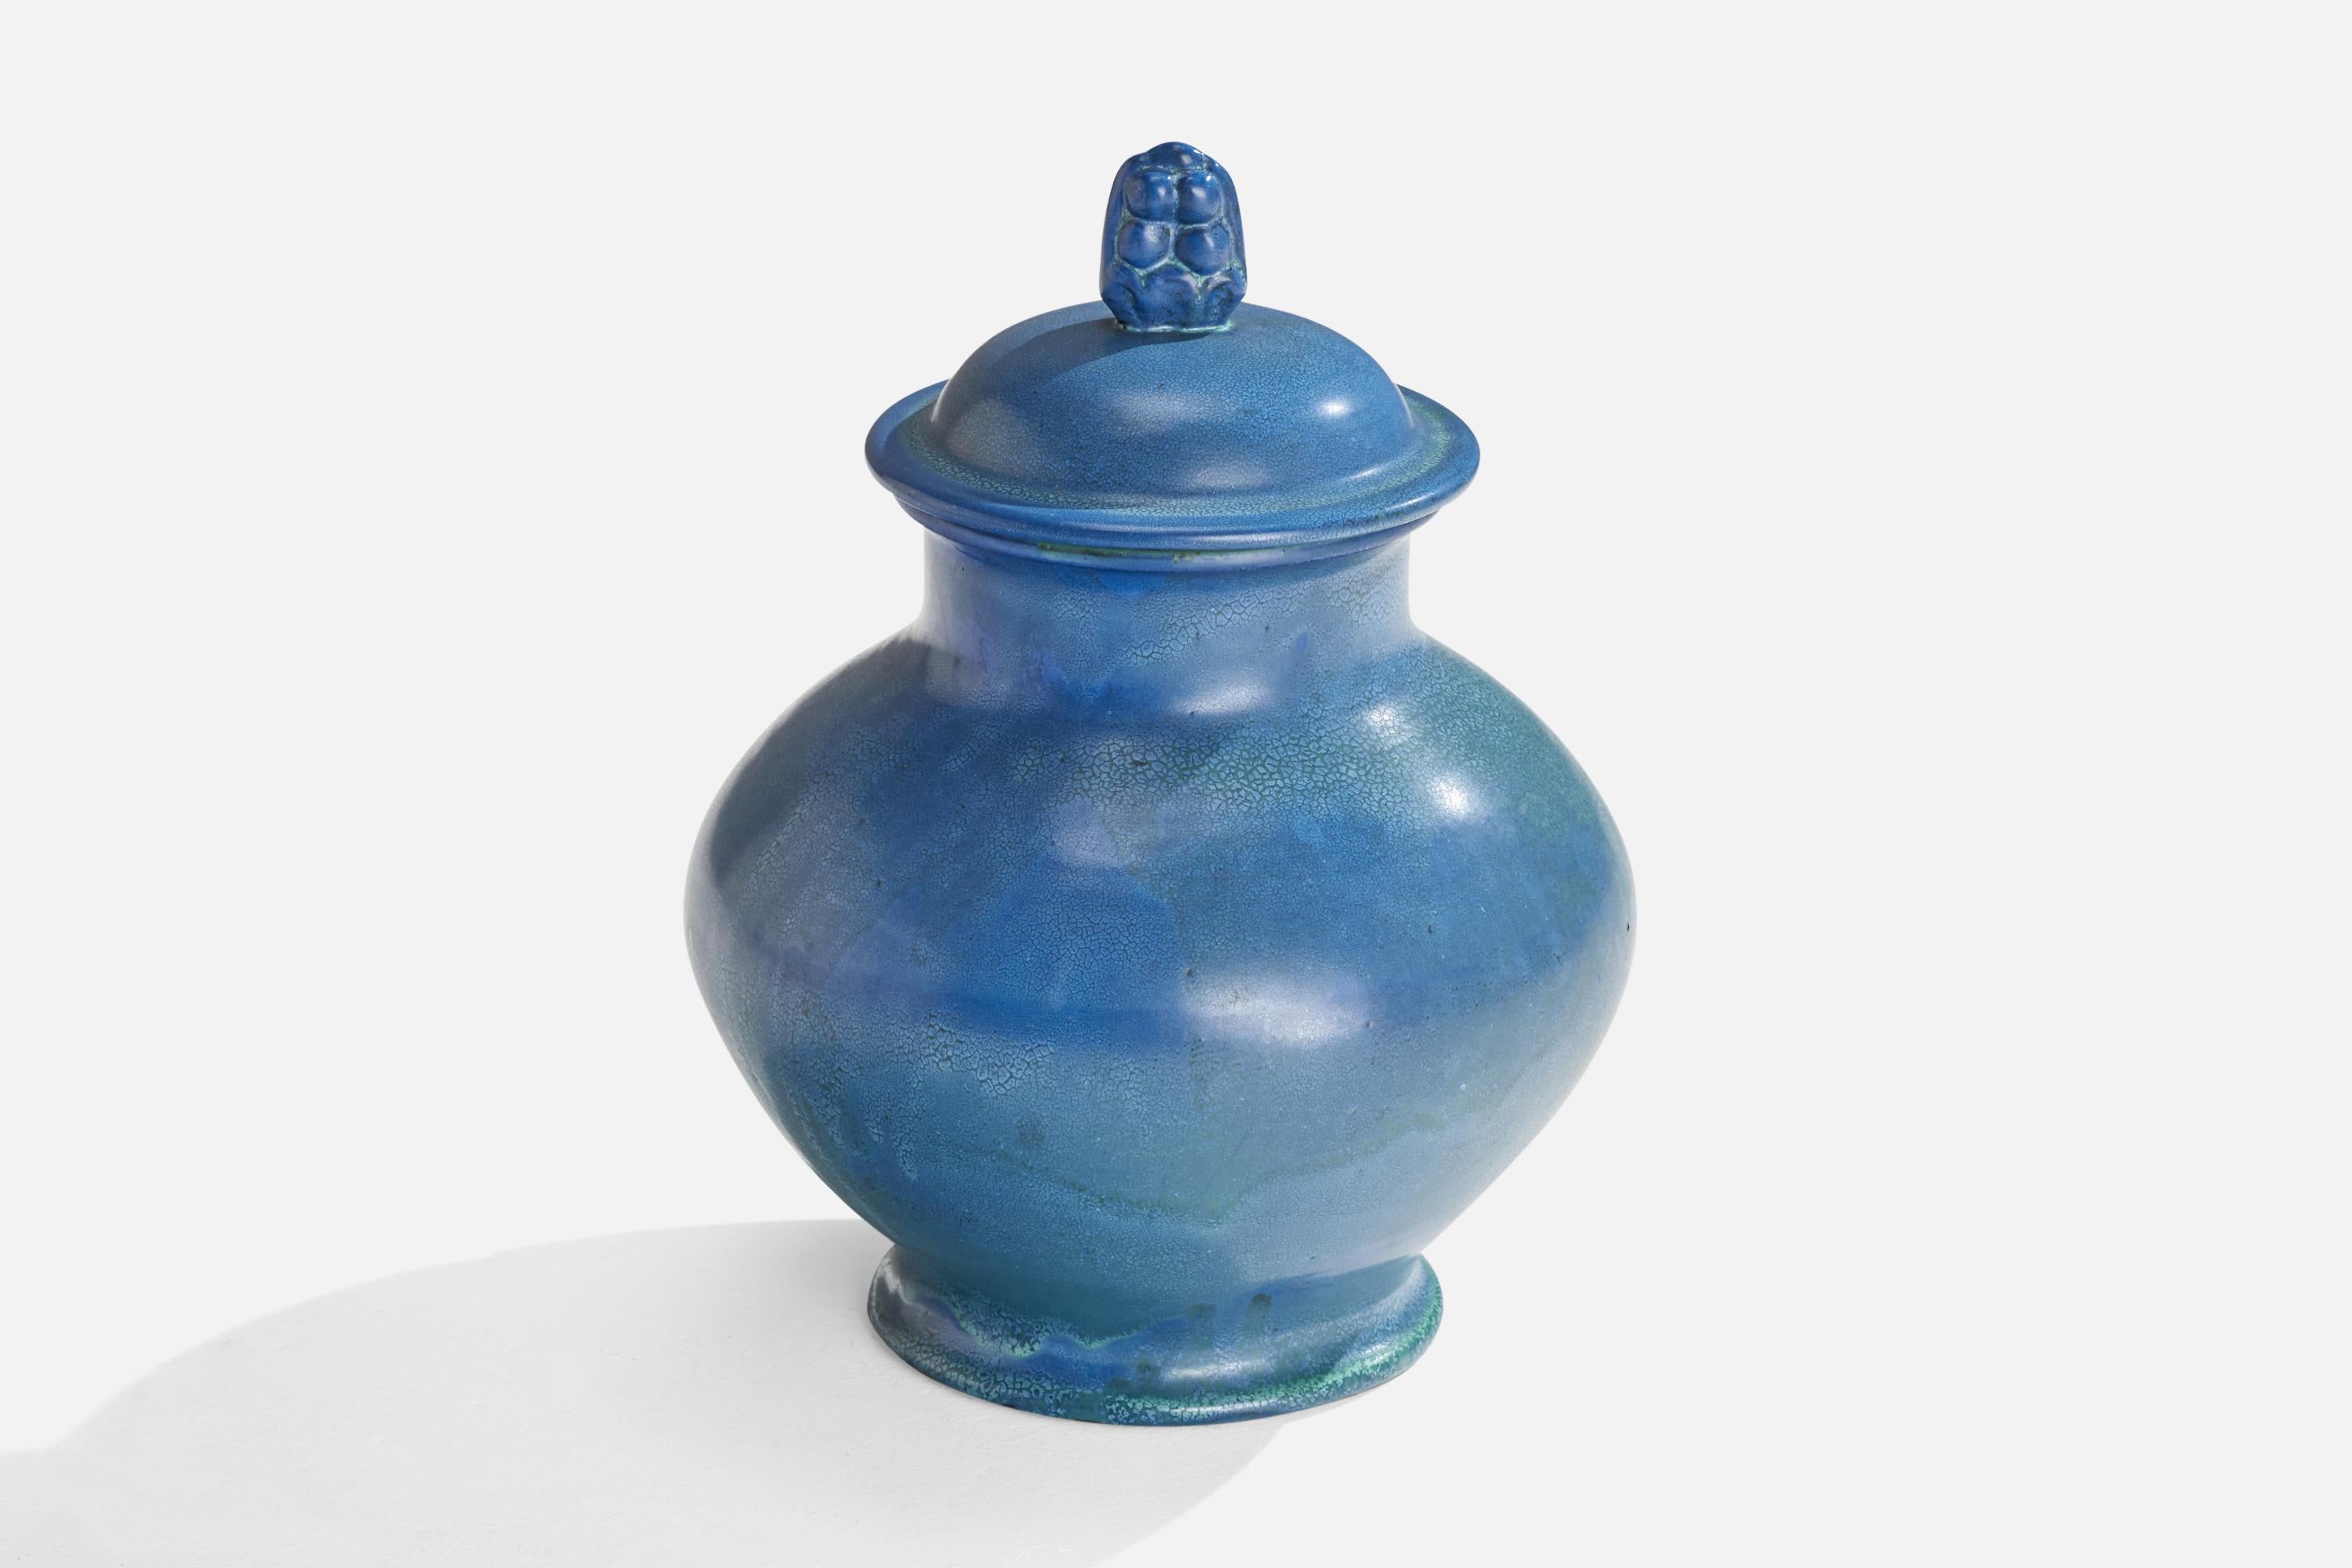 A sizeable blue-glazed earthenware urn designed and produced by Upsala Ekeby, Sweden, c. 1930s.